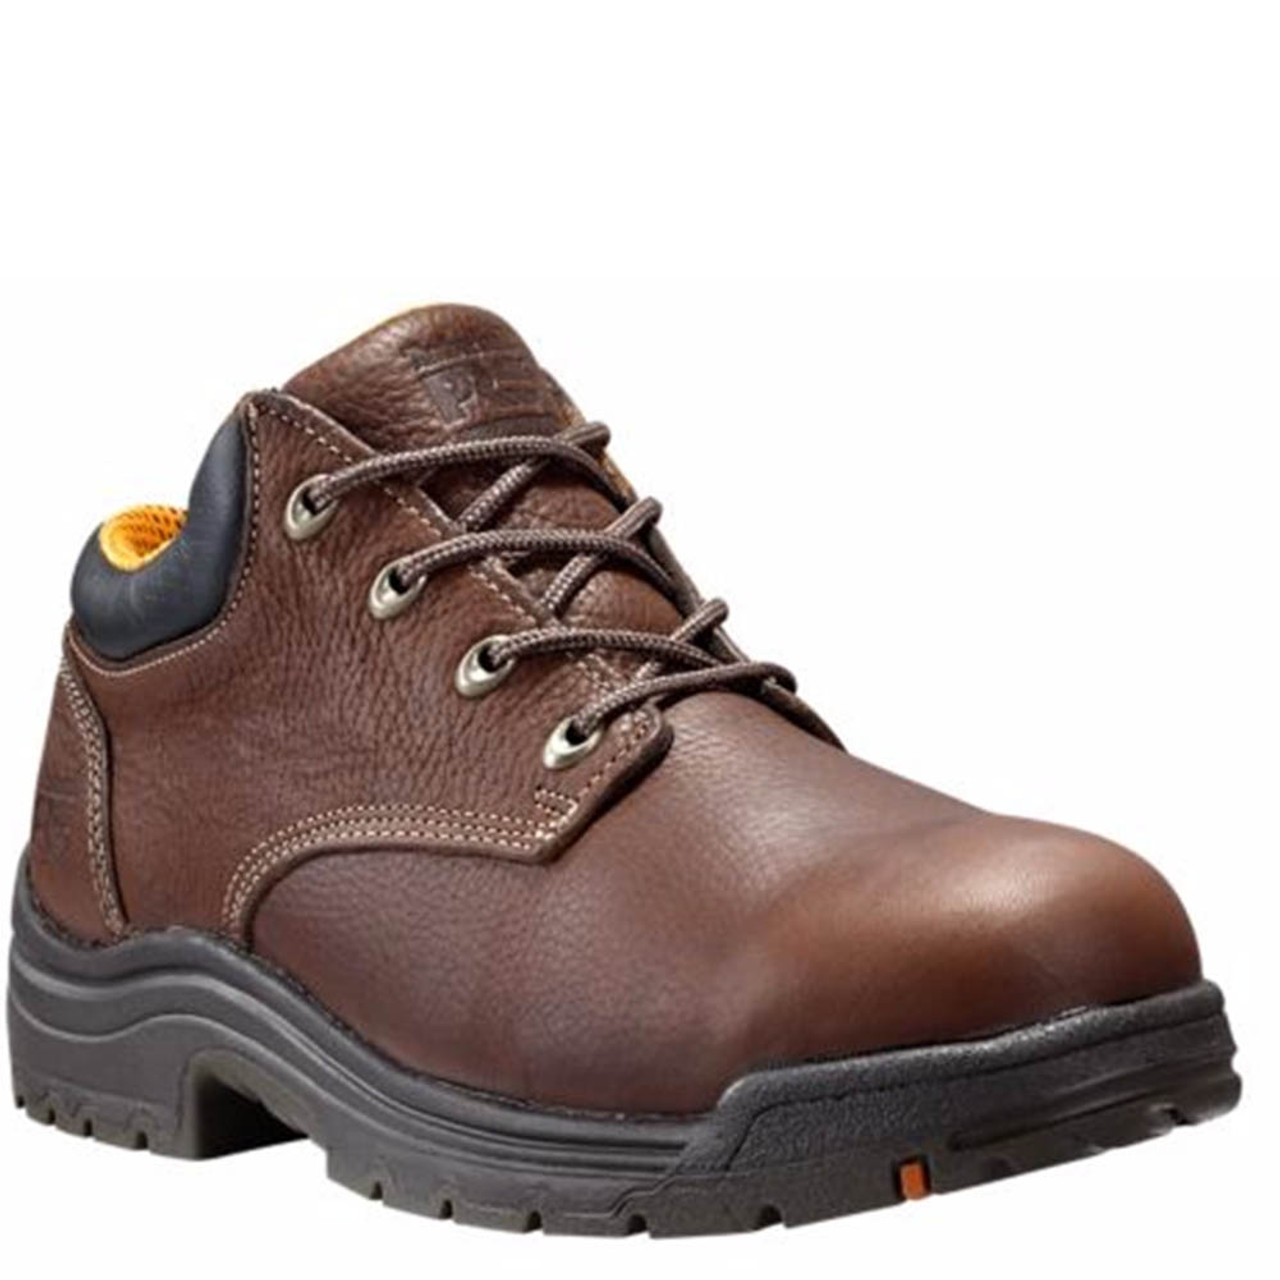 Timberland Pro 47028 Titan Safety Toe Shoe